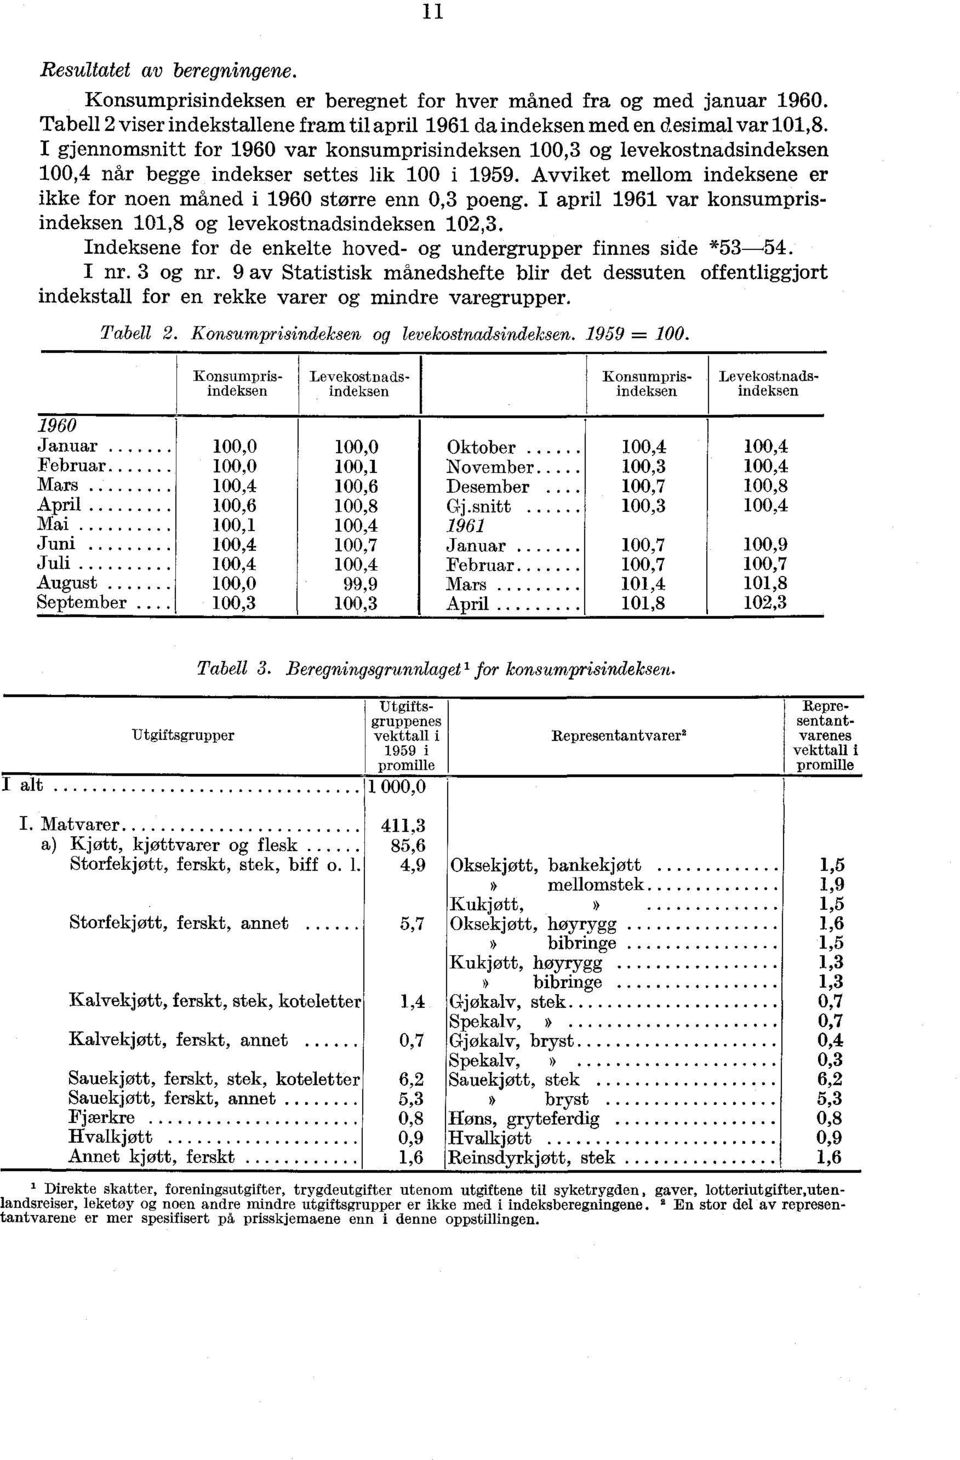 I april 1961 var konsumprisindeksen,8 levekostnadsindeksen,3. Indeksene for de enkelte hoved- undergrupper finnes side *53-54. I nr. 3 nr.